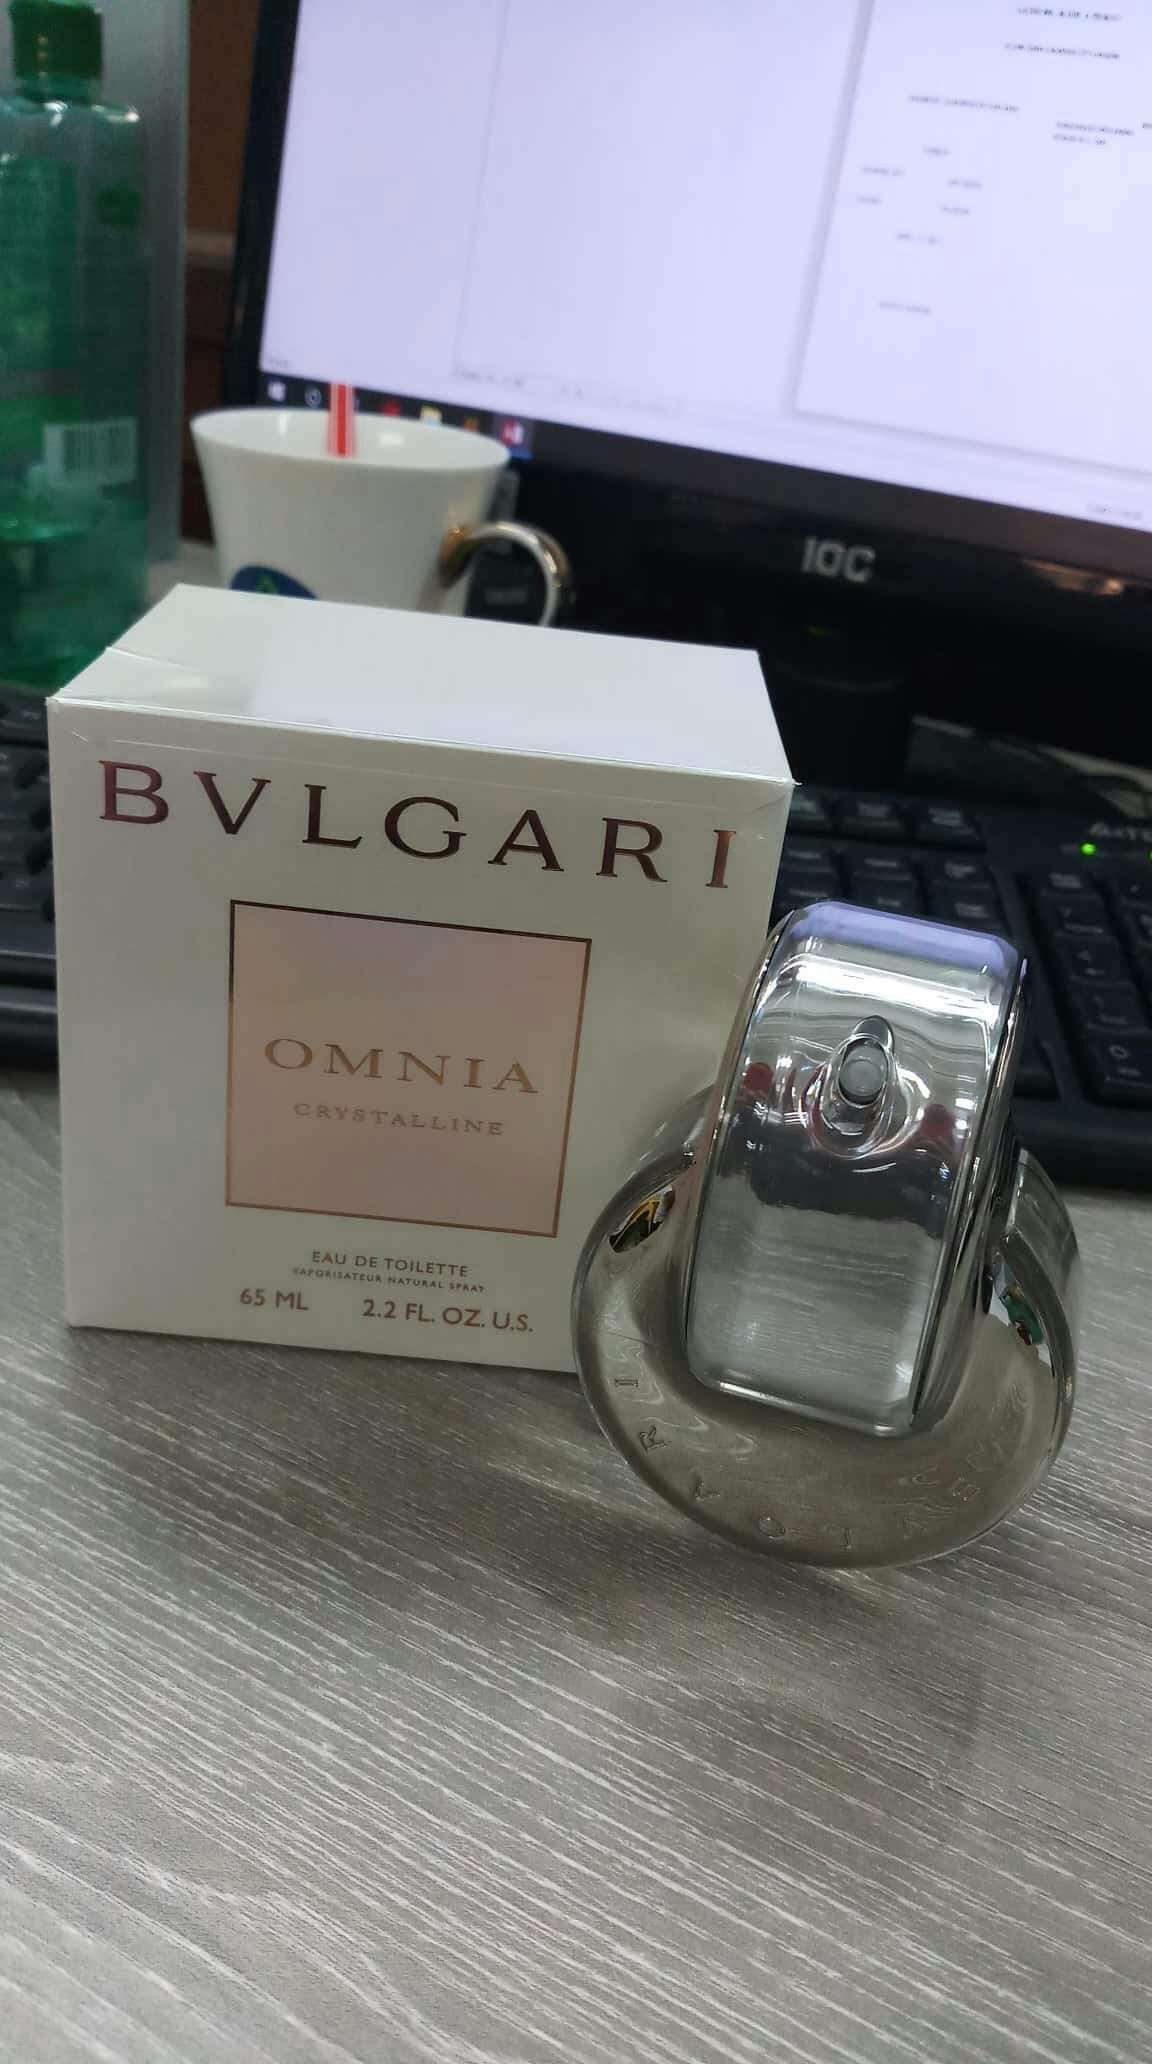 bvlgari omnia crystalline price philippines